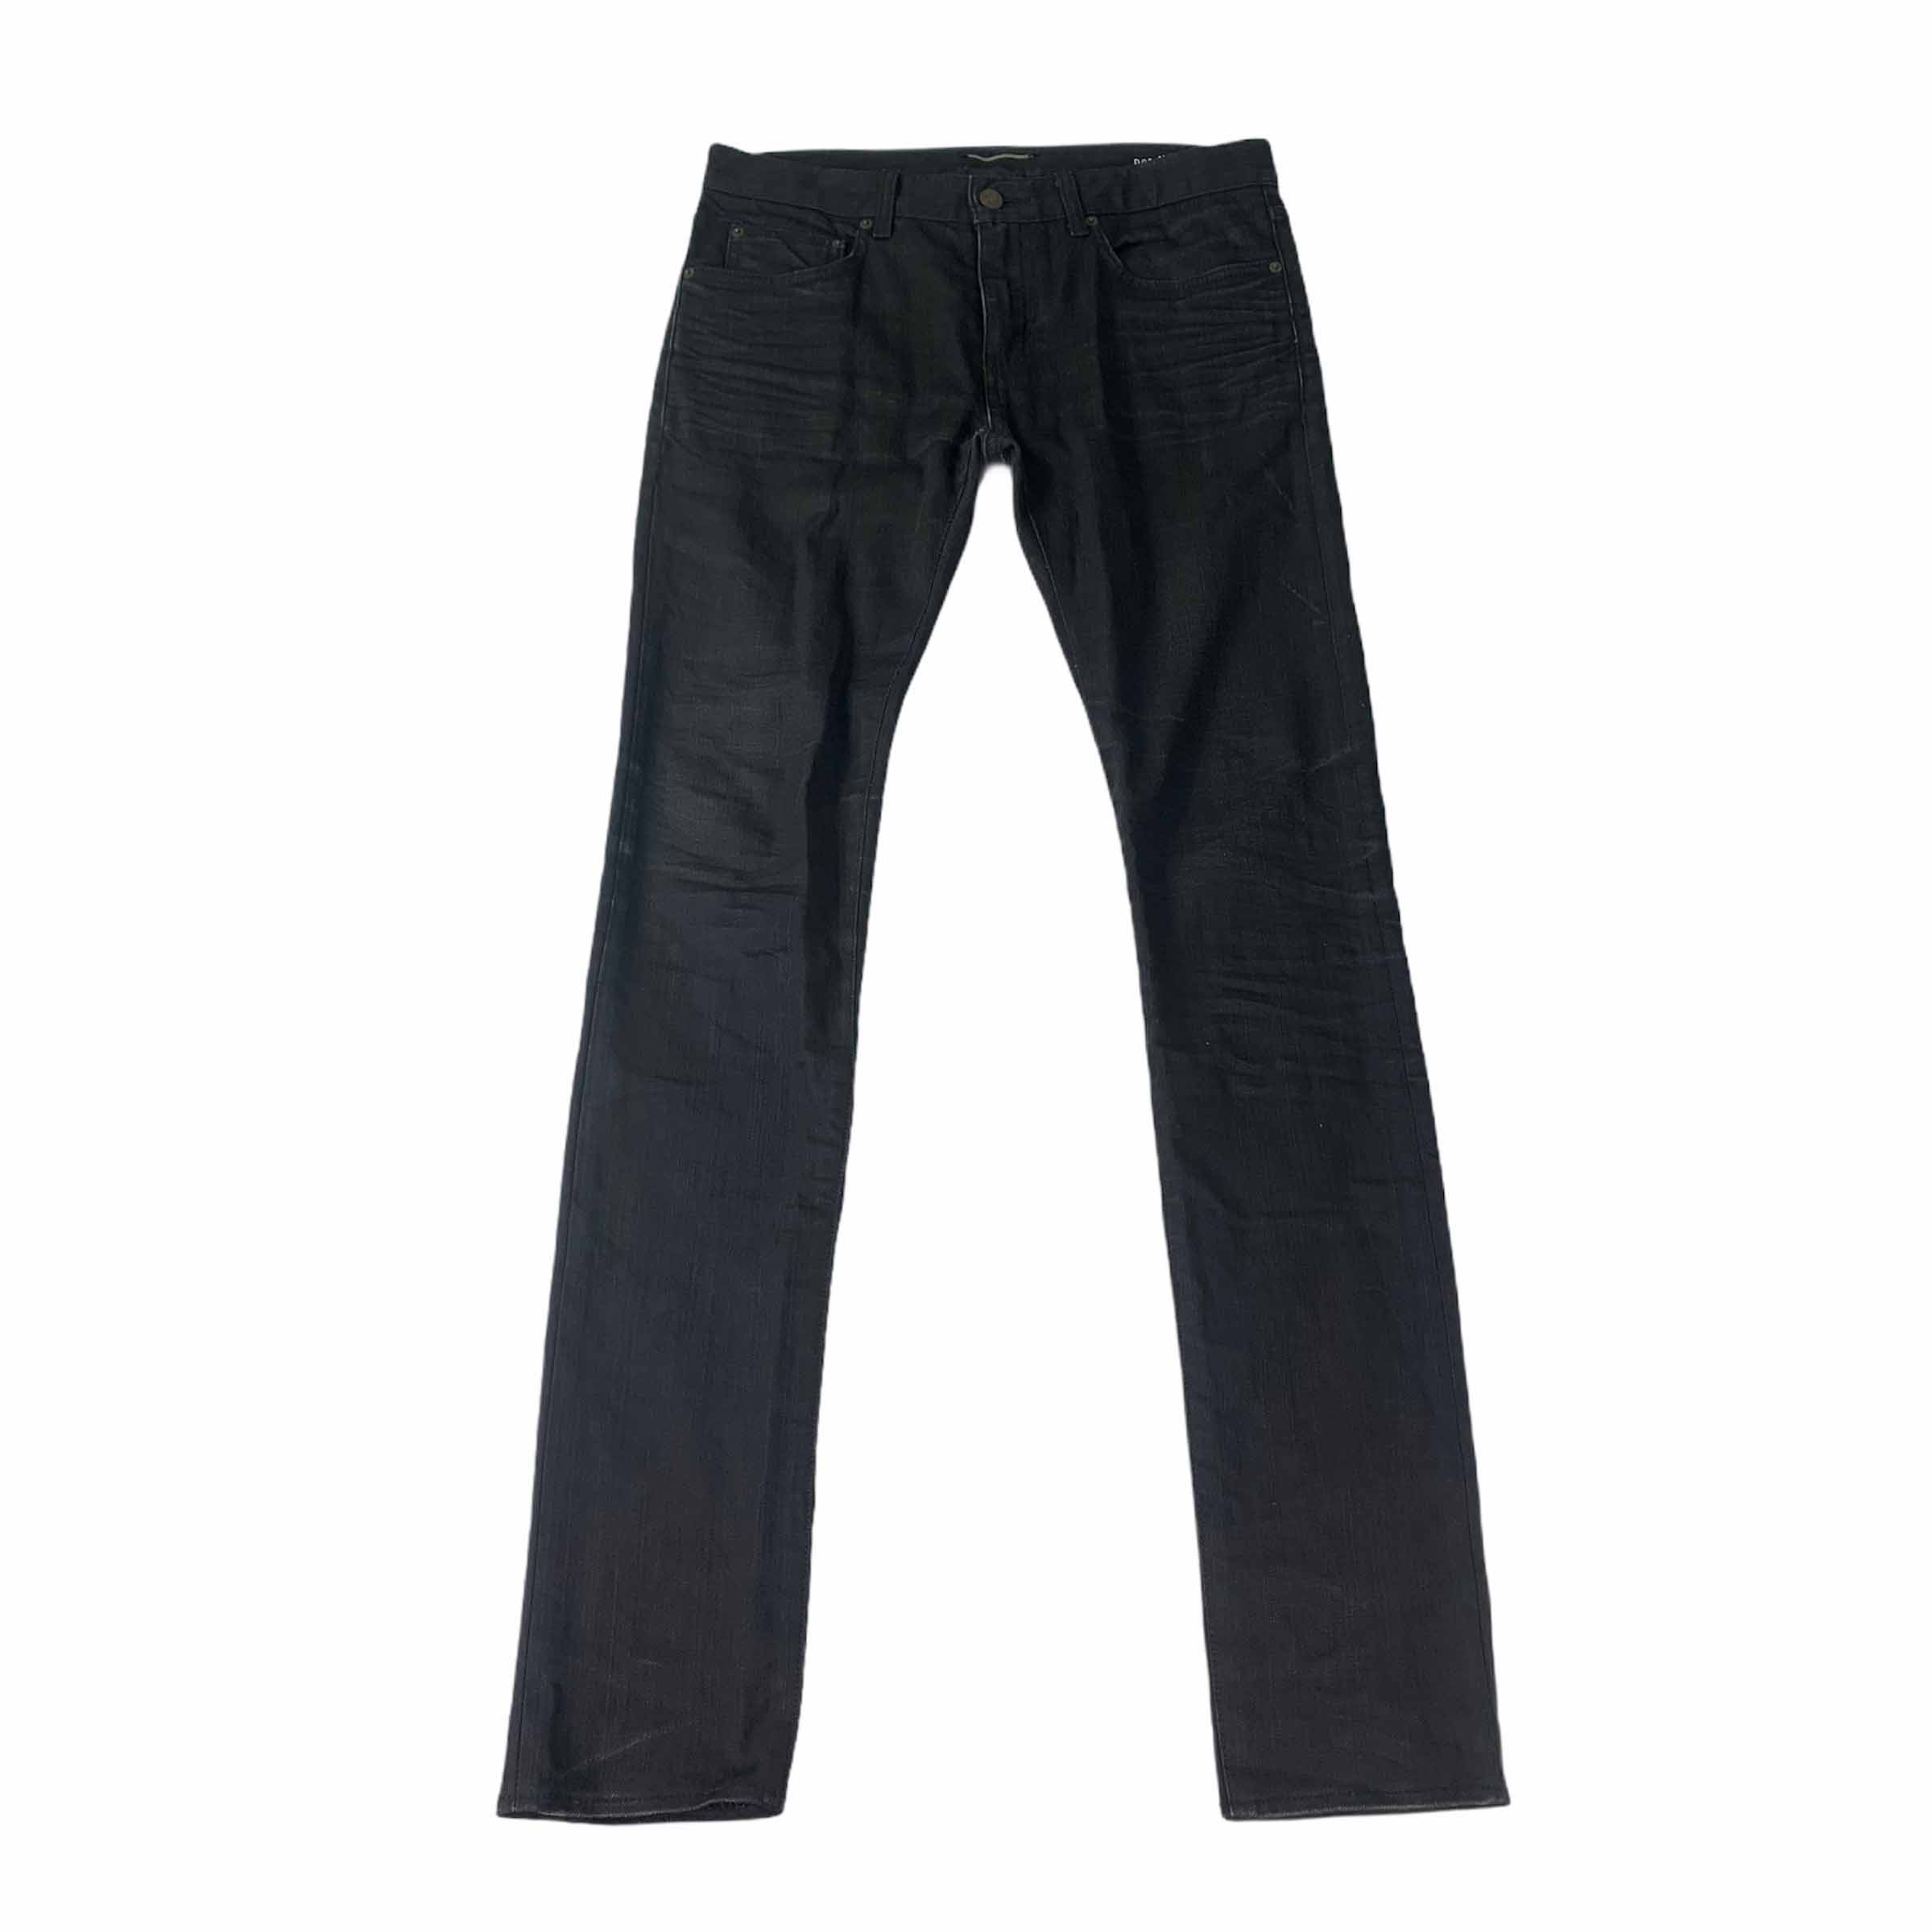 [Saint Laurent] Black Skinny Jeans BK - Size 30